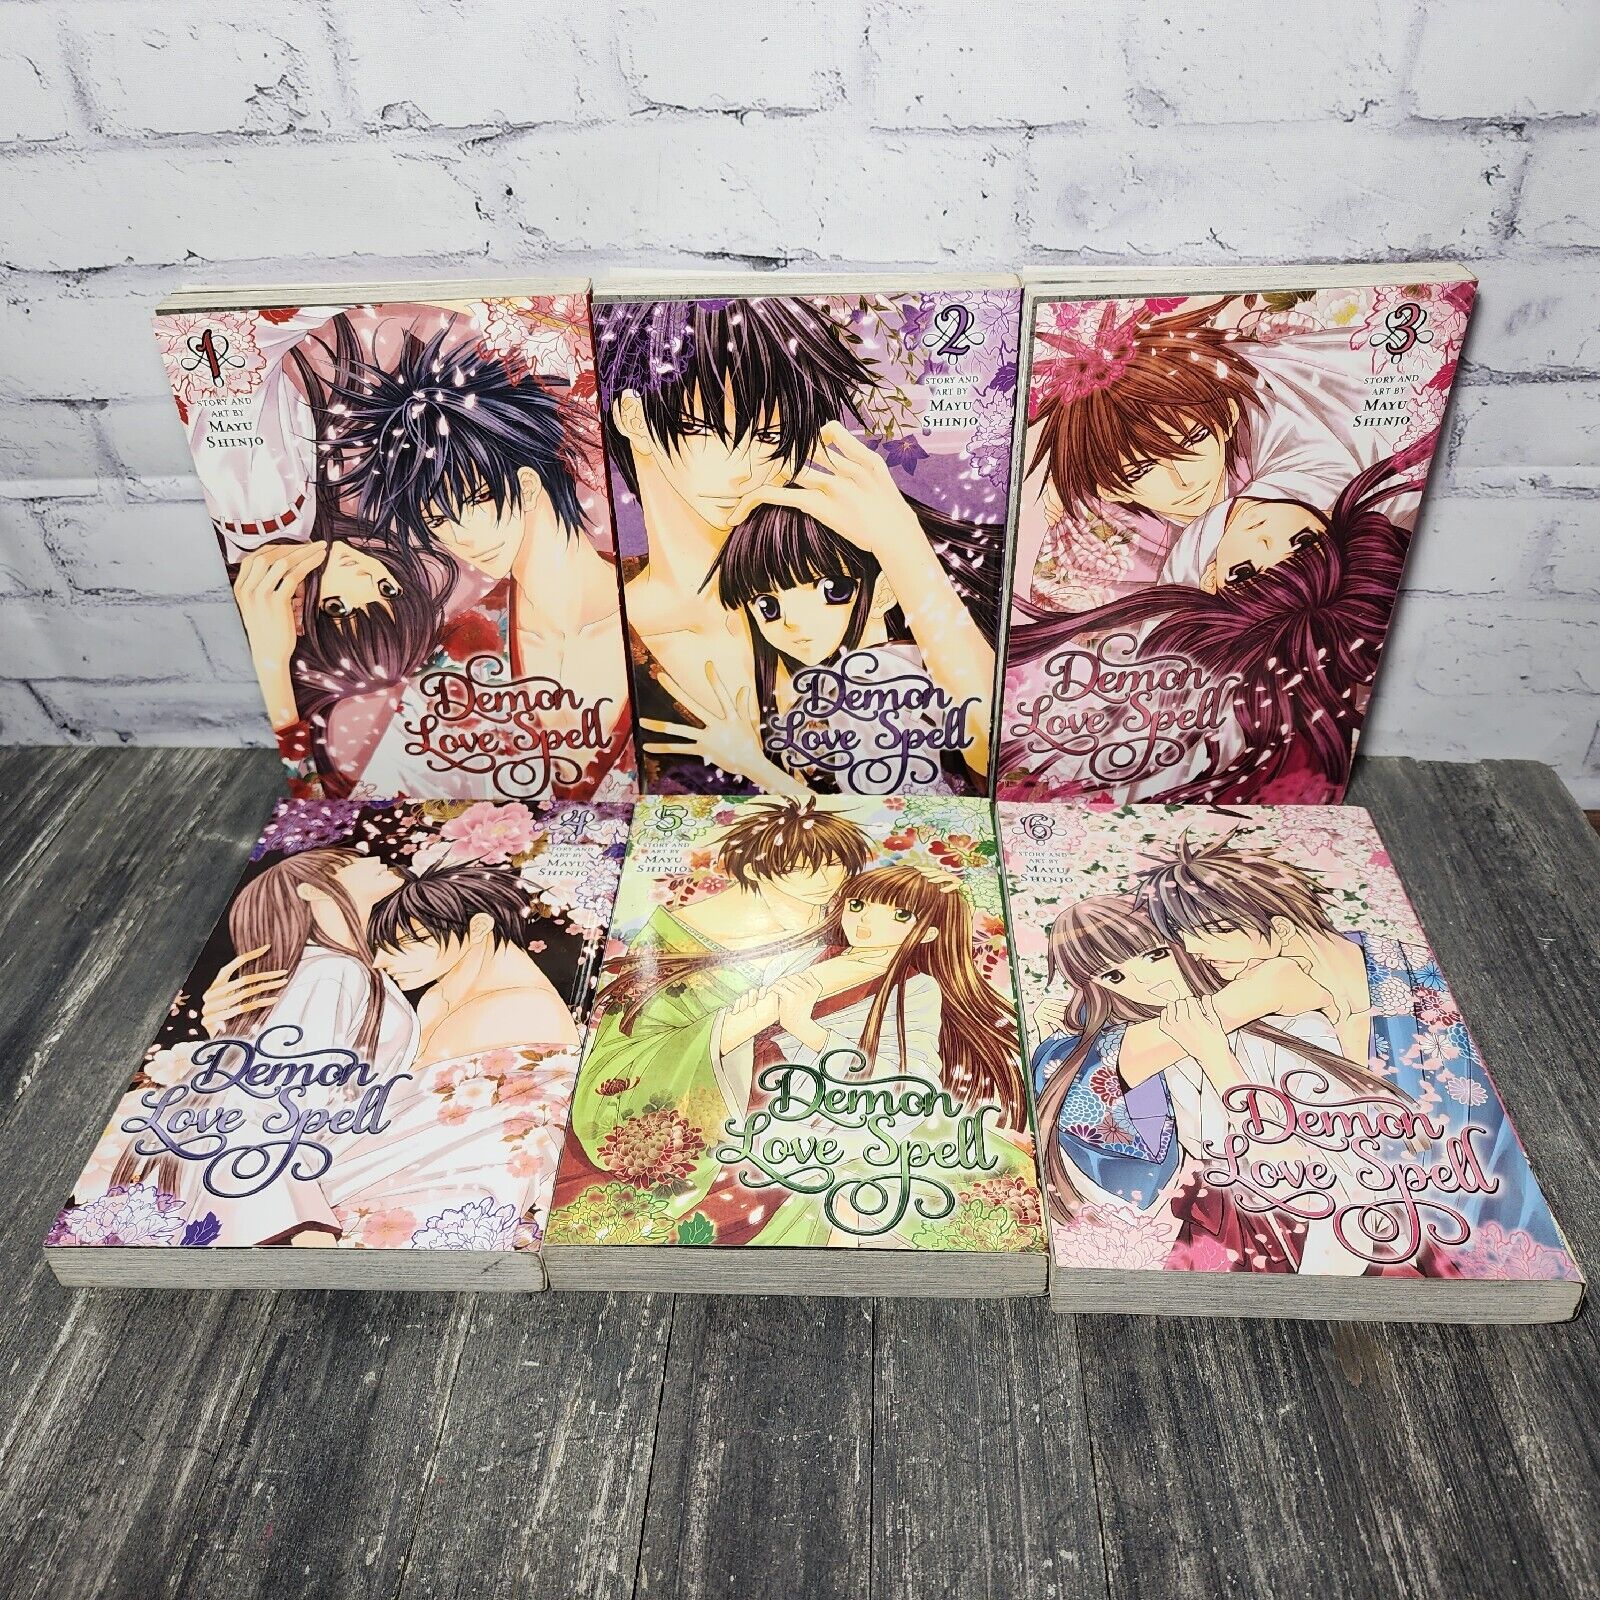 Demon Love Spell by Mayu Shinjo Vols. 1-6 Manga Viz Media Shojo English 